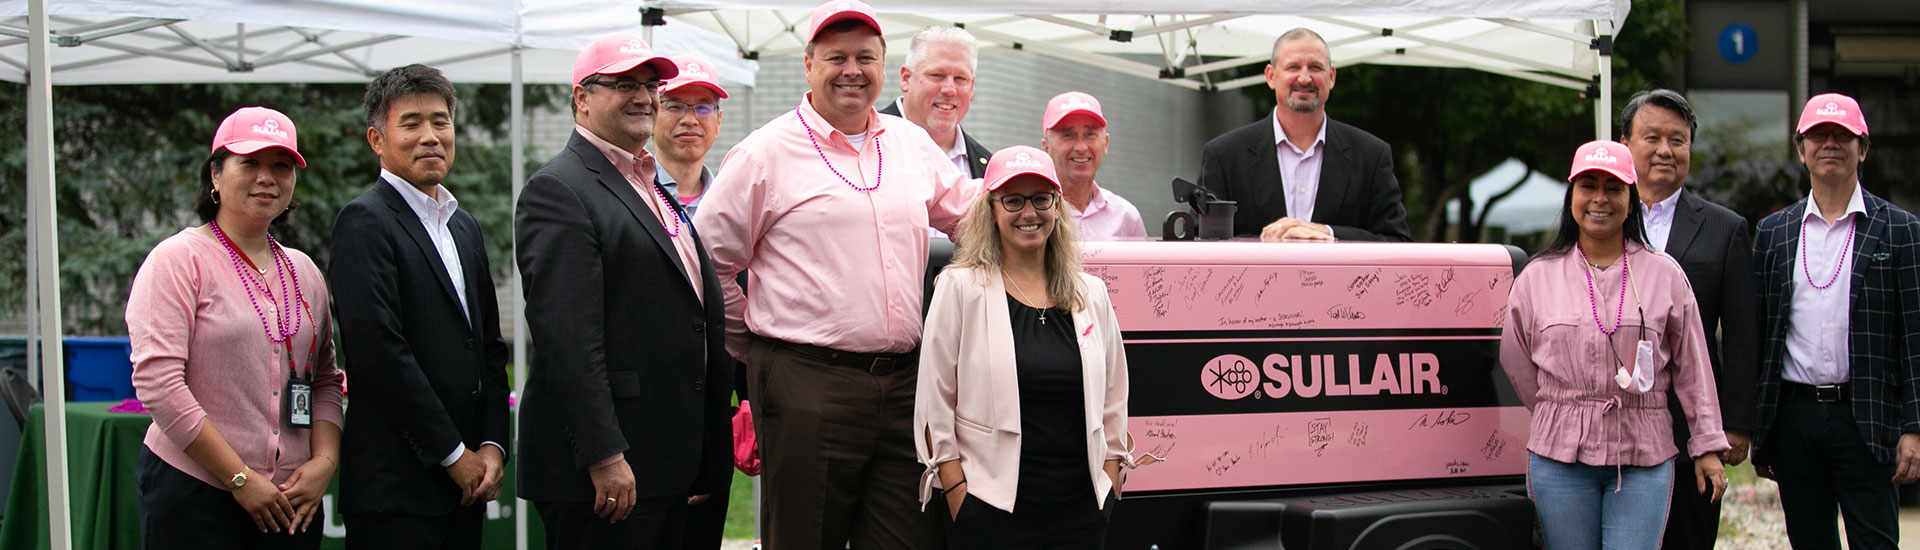 imgSullair Pink Compressor Raises $32,500 for The ARA Foundation and $21,000 for Susan G. Komen® Chicago